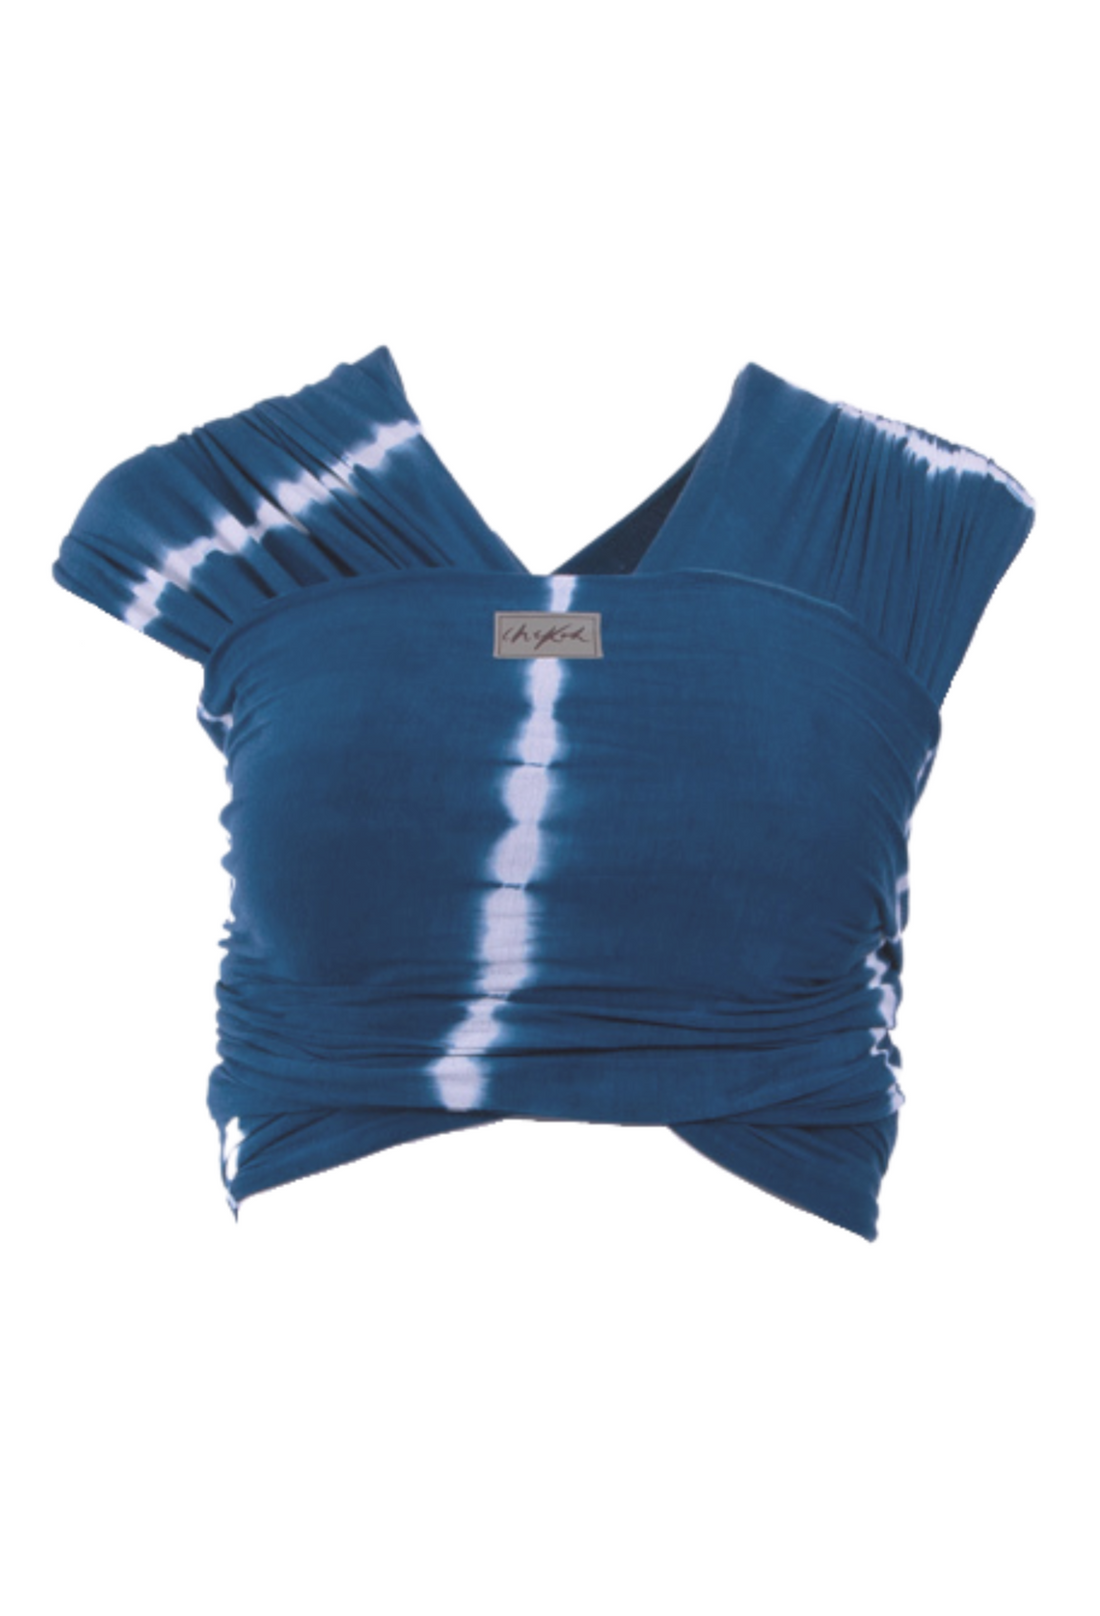 indigo tie dye tiedye best stretchy wrap carrier from australia chekoh best bamboo baby carrier for newborn